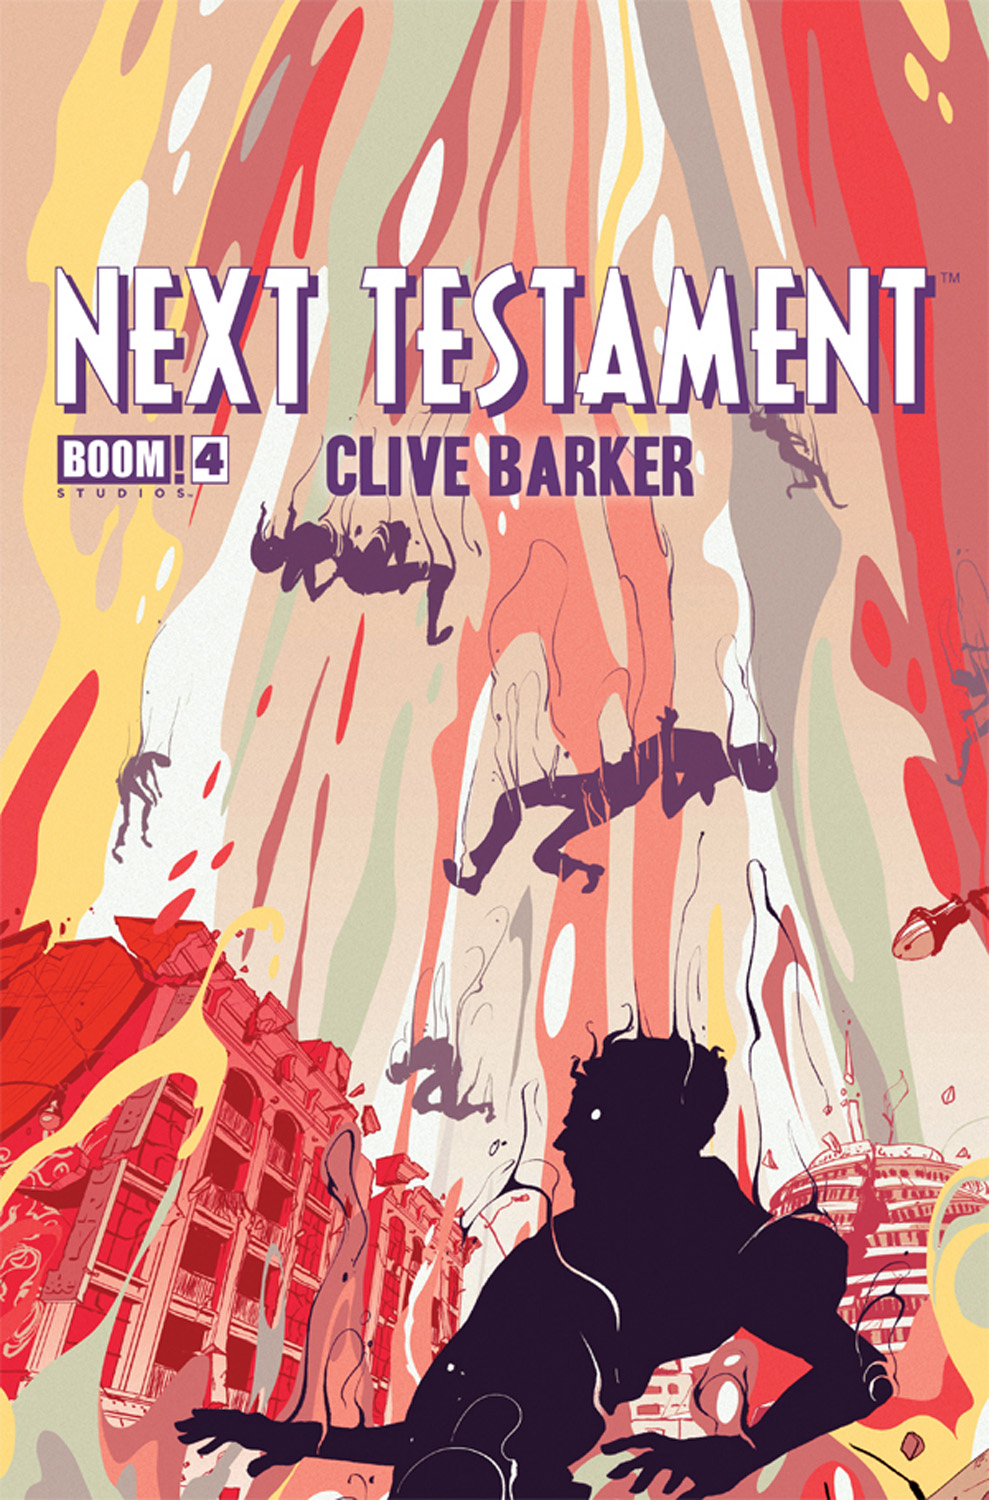 High Resolution Wallpaper | Clive Barker's Next Testament 989x1500 px